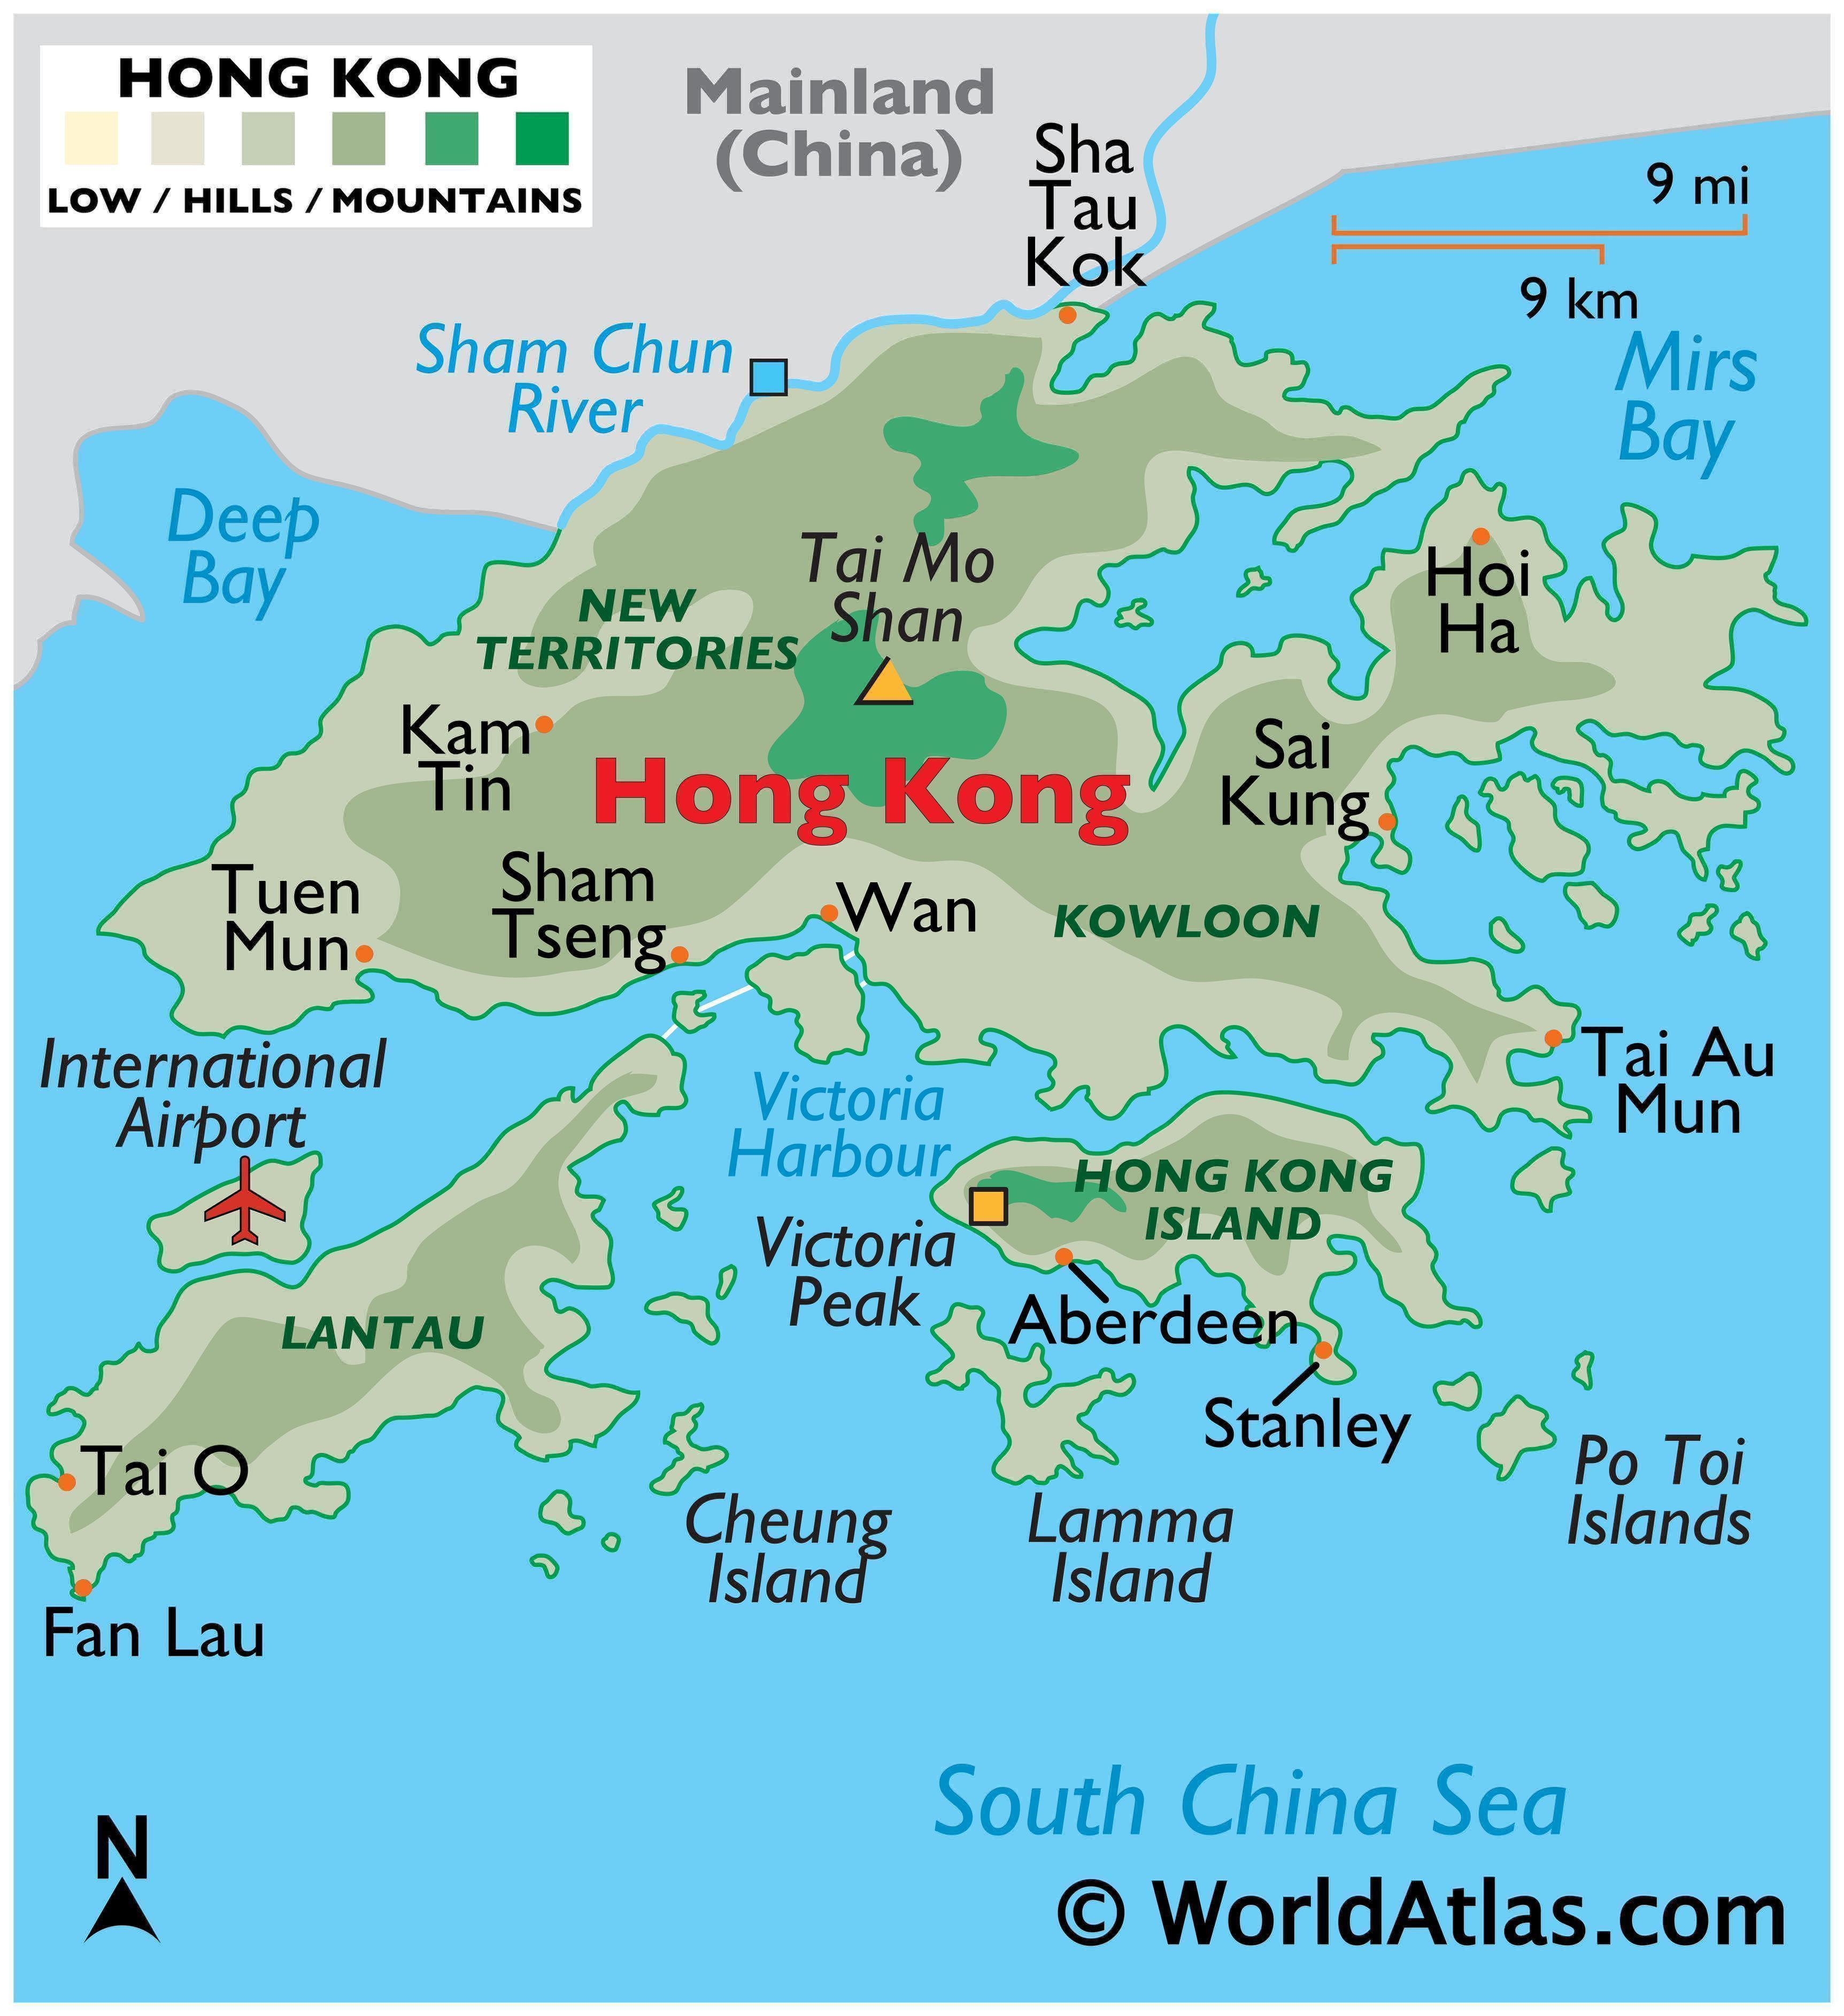 Show Me A Map Of Hong Kong Hong Kong Map / Geography of Hong Kong / Map of Hong Kong 